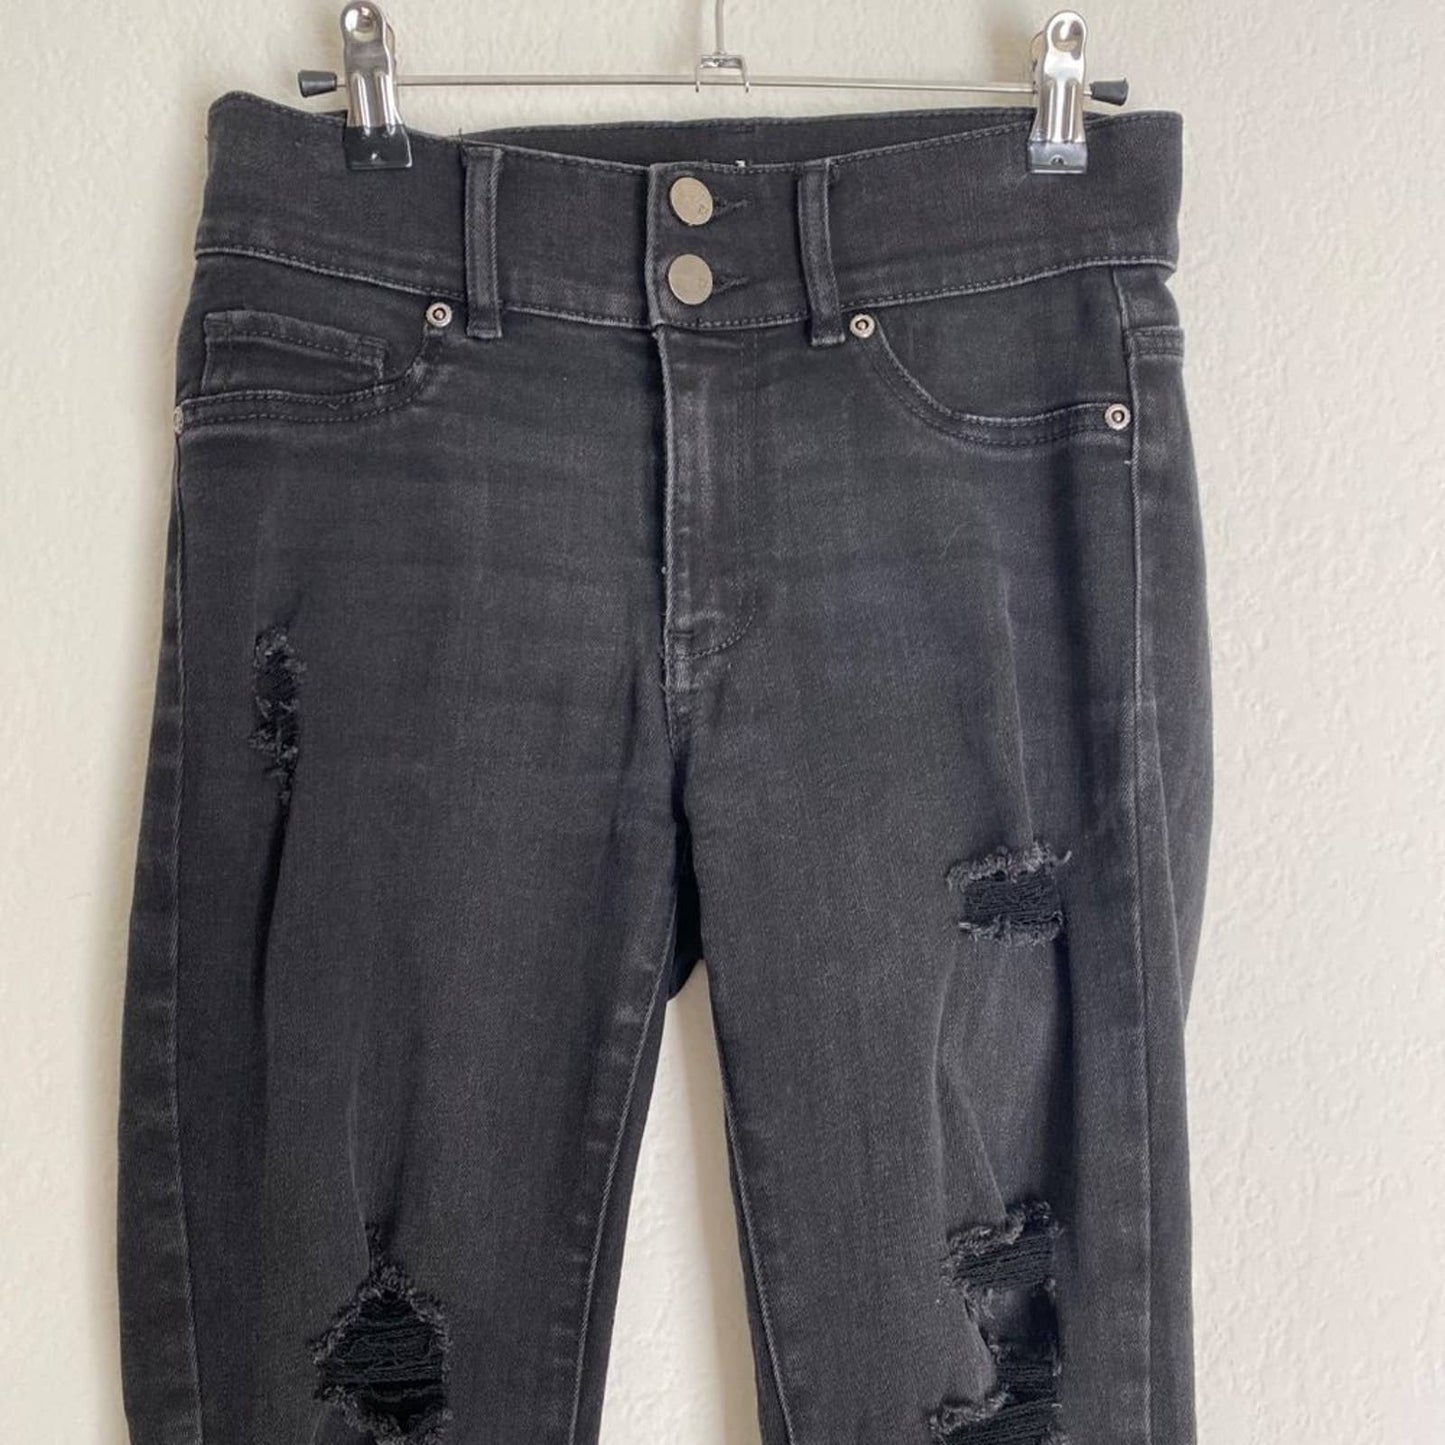 Soho Jean sz 4 High waist legging jeans